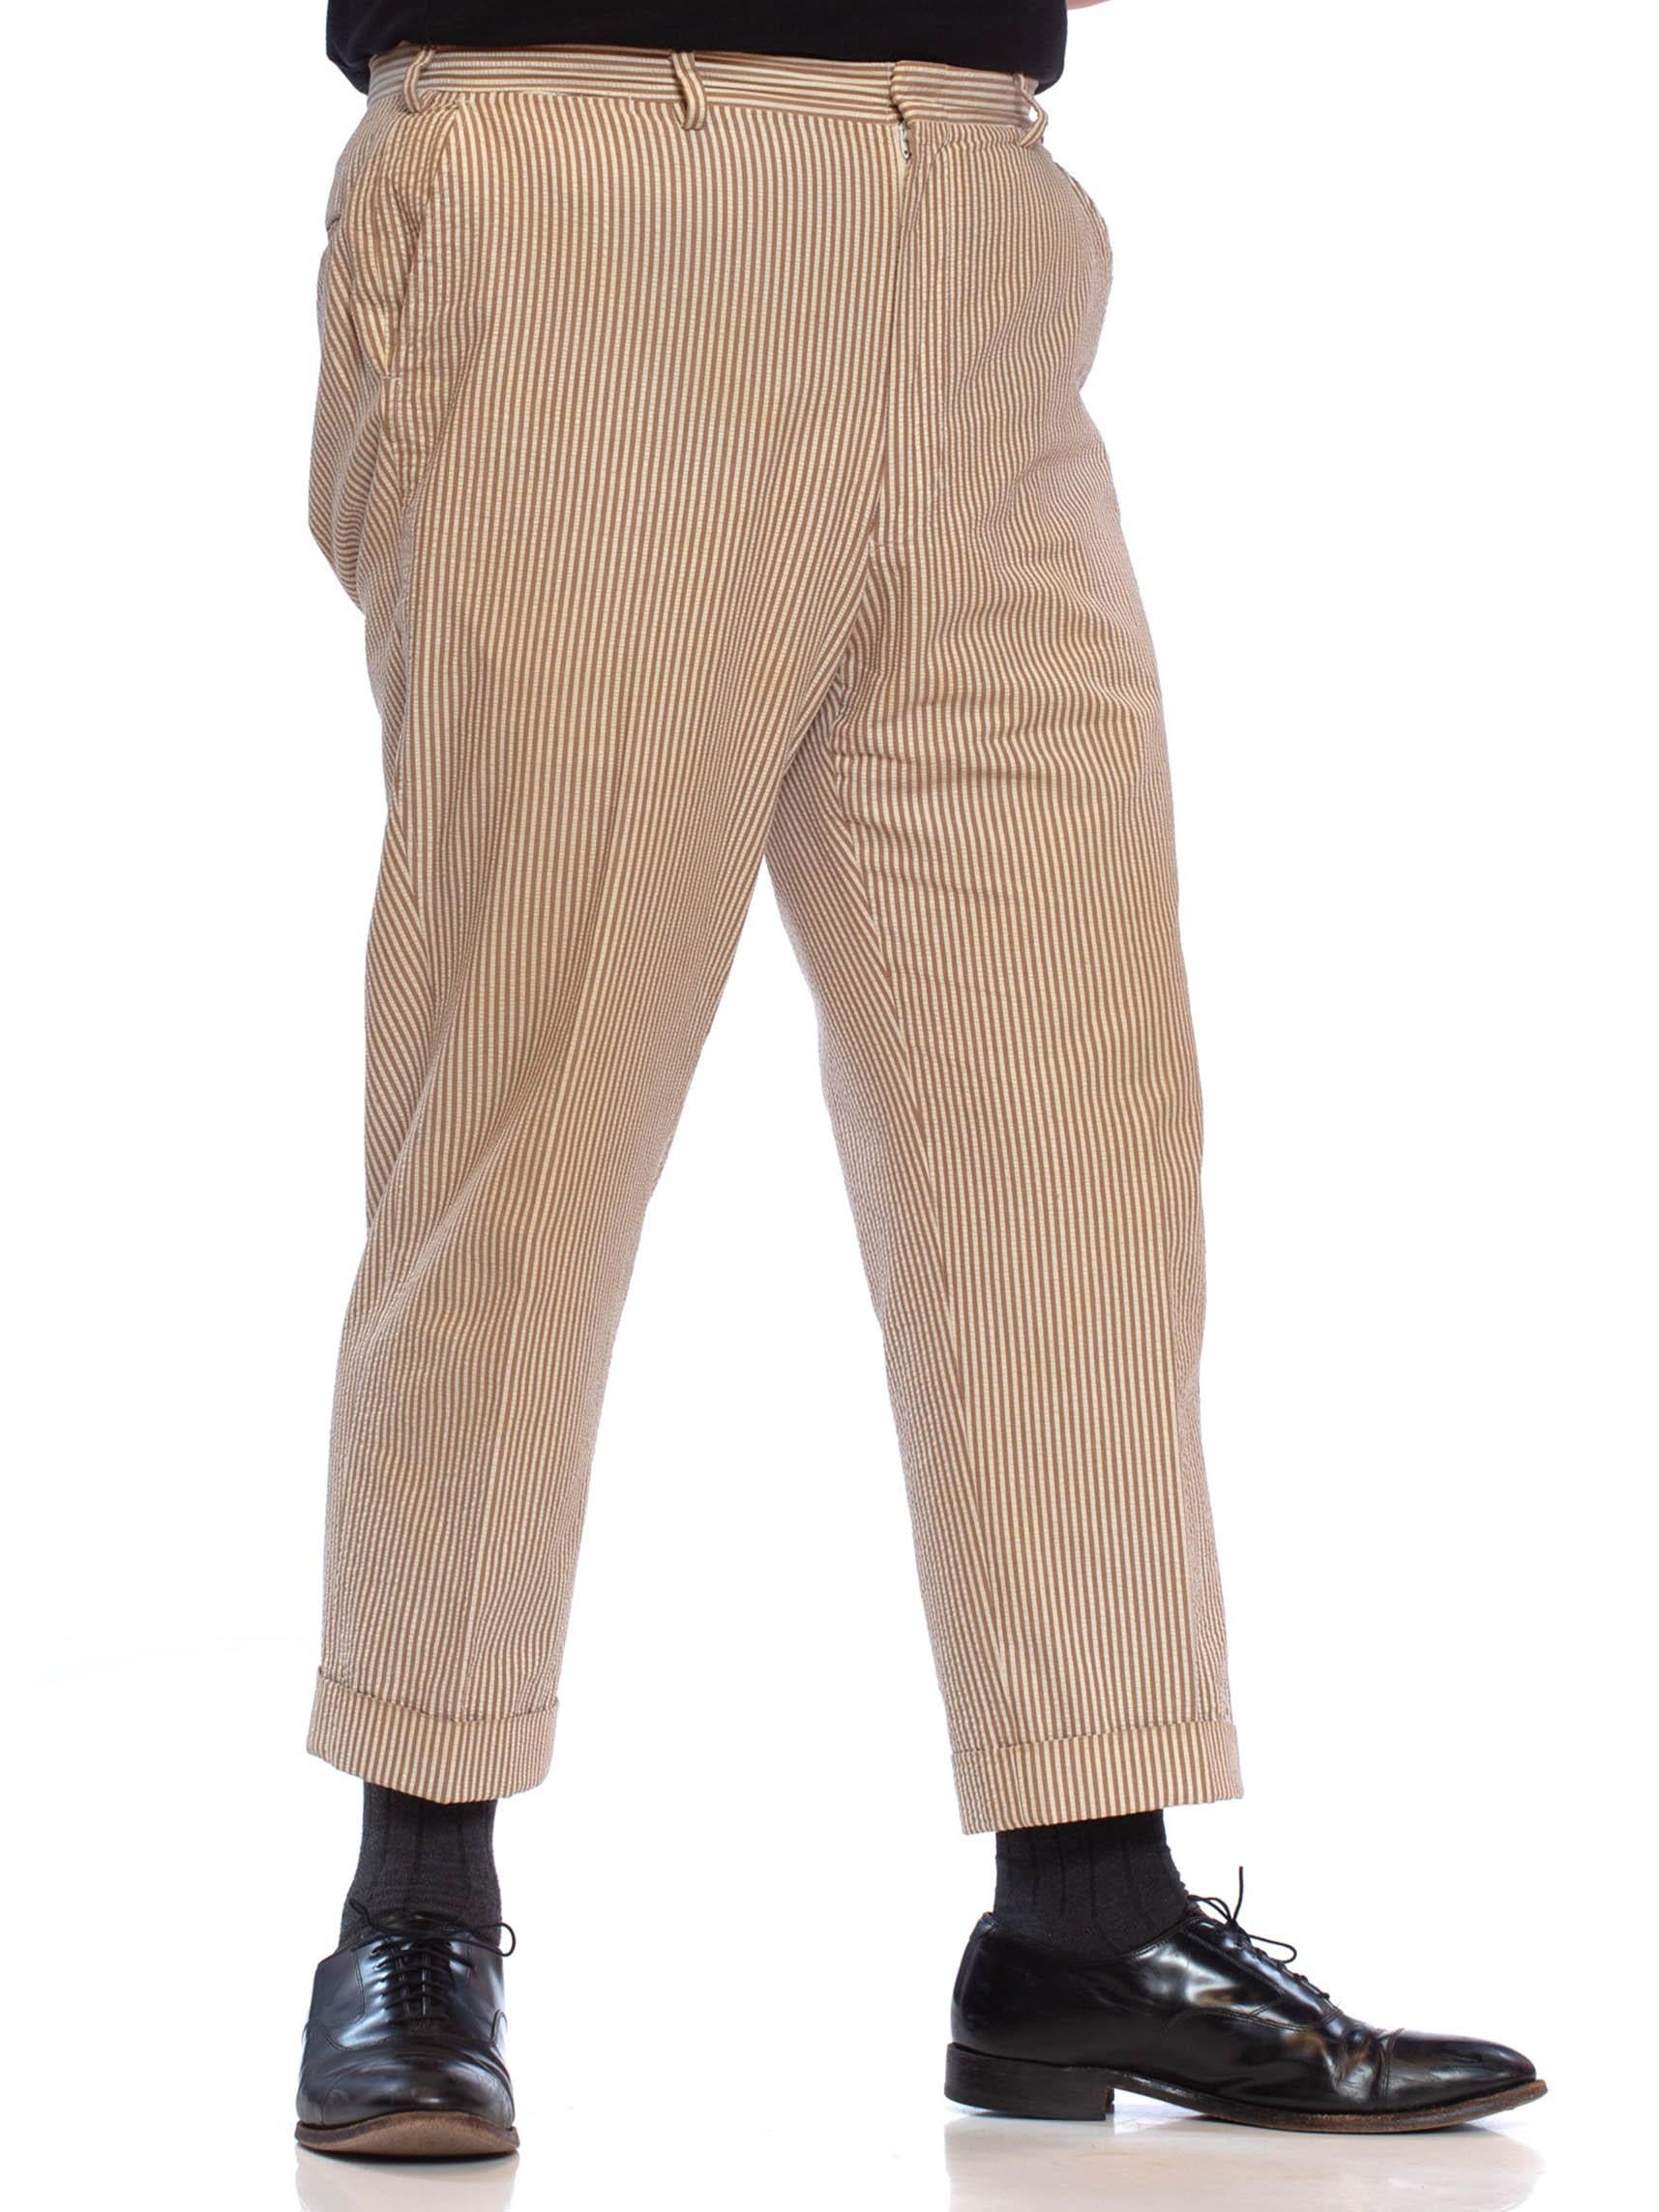 1970s pants men